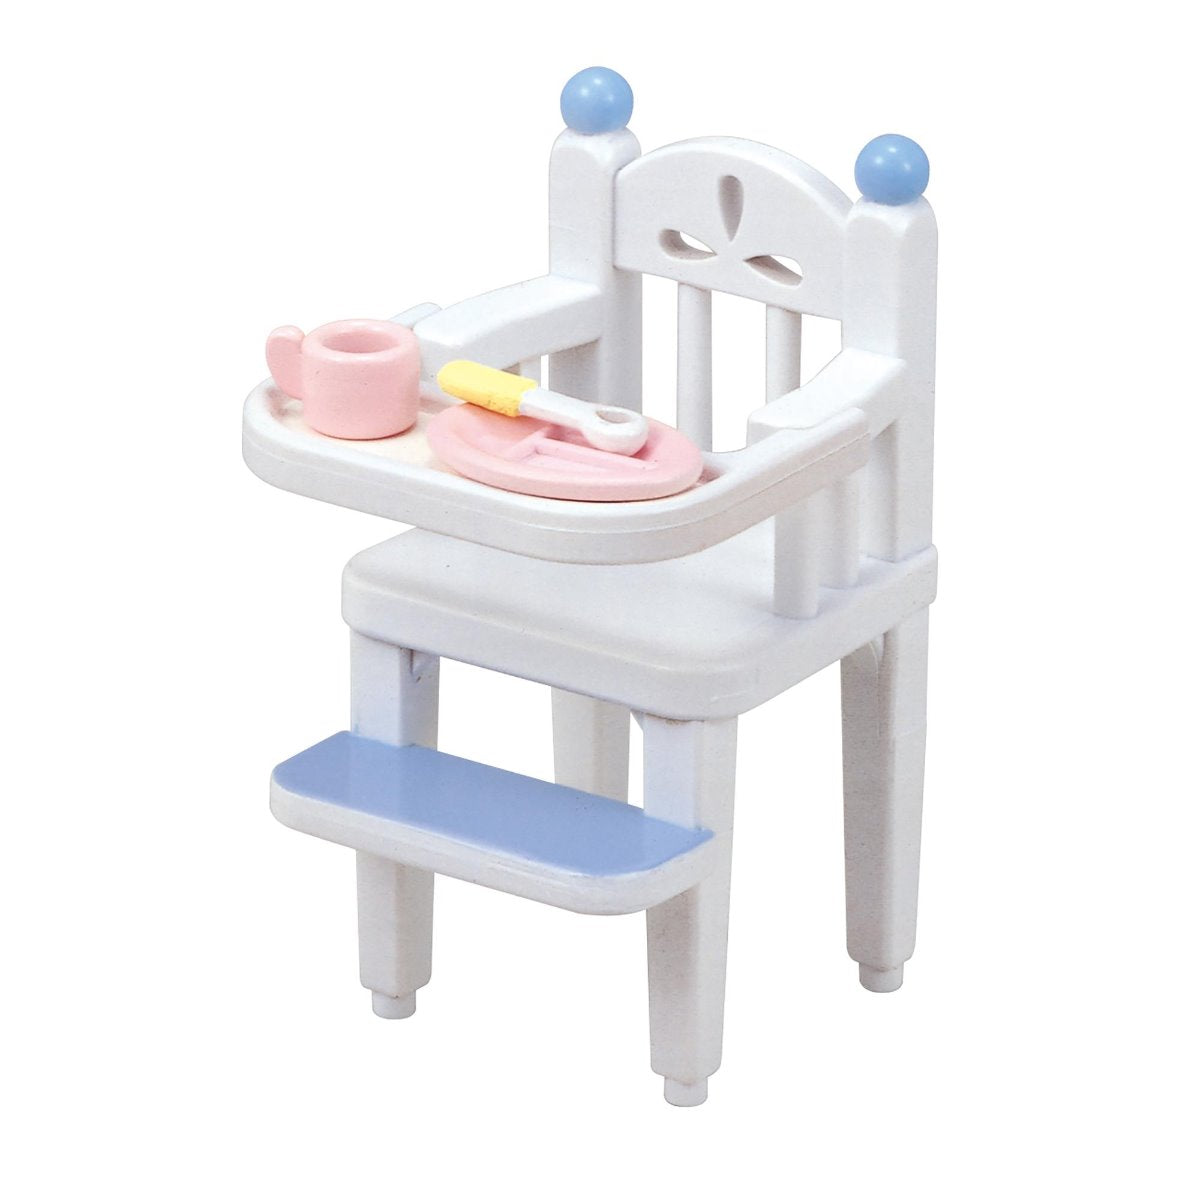 Sylvanian Families 5221 - Baby High Chair